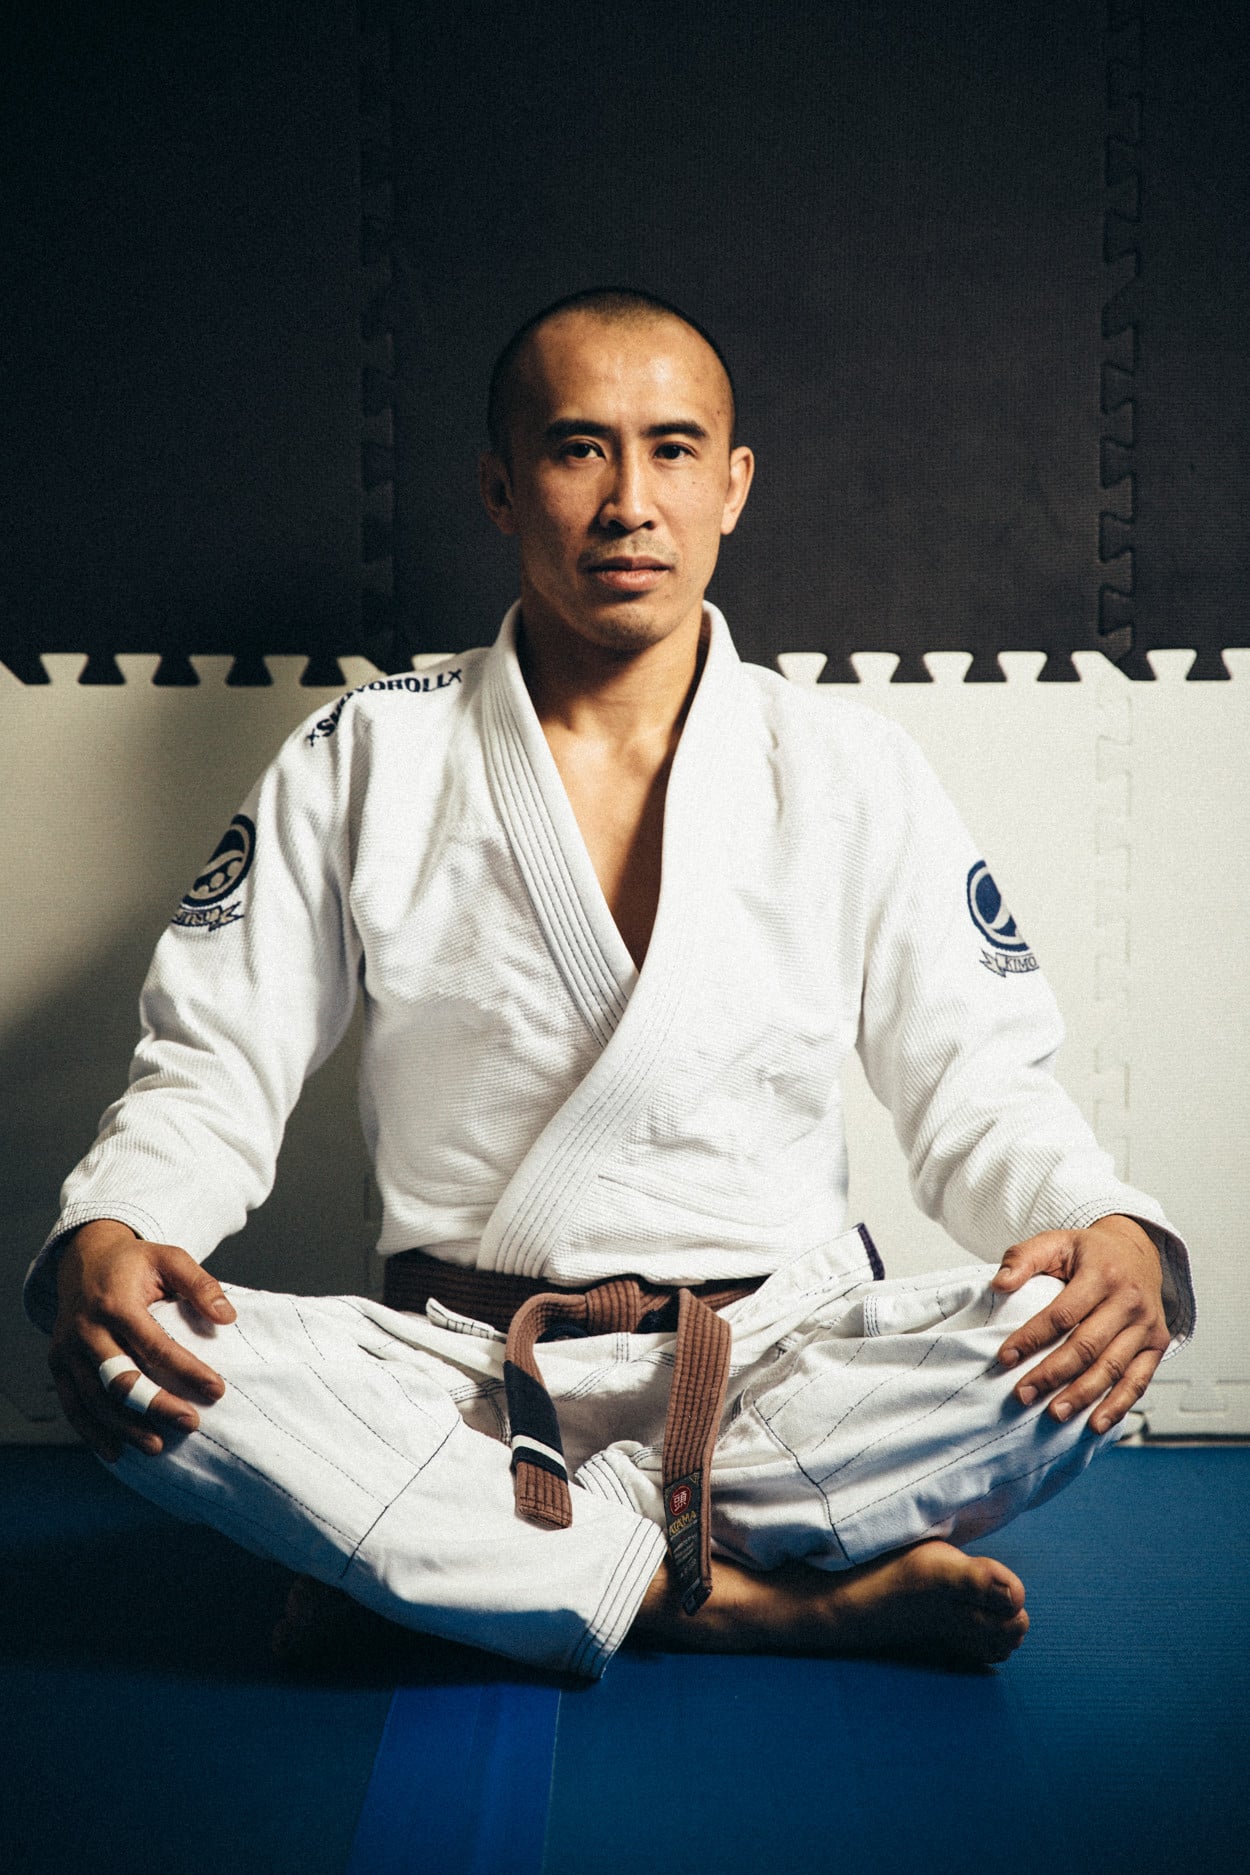 The Kodokan Jiu-jitsu Club Randy Chung